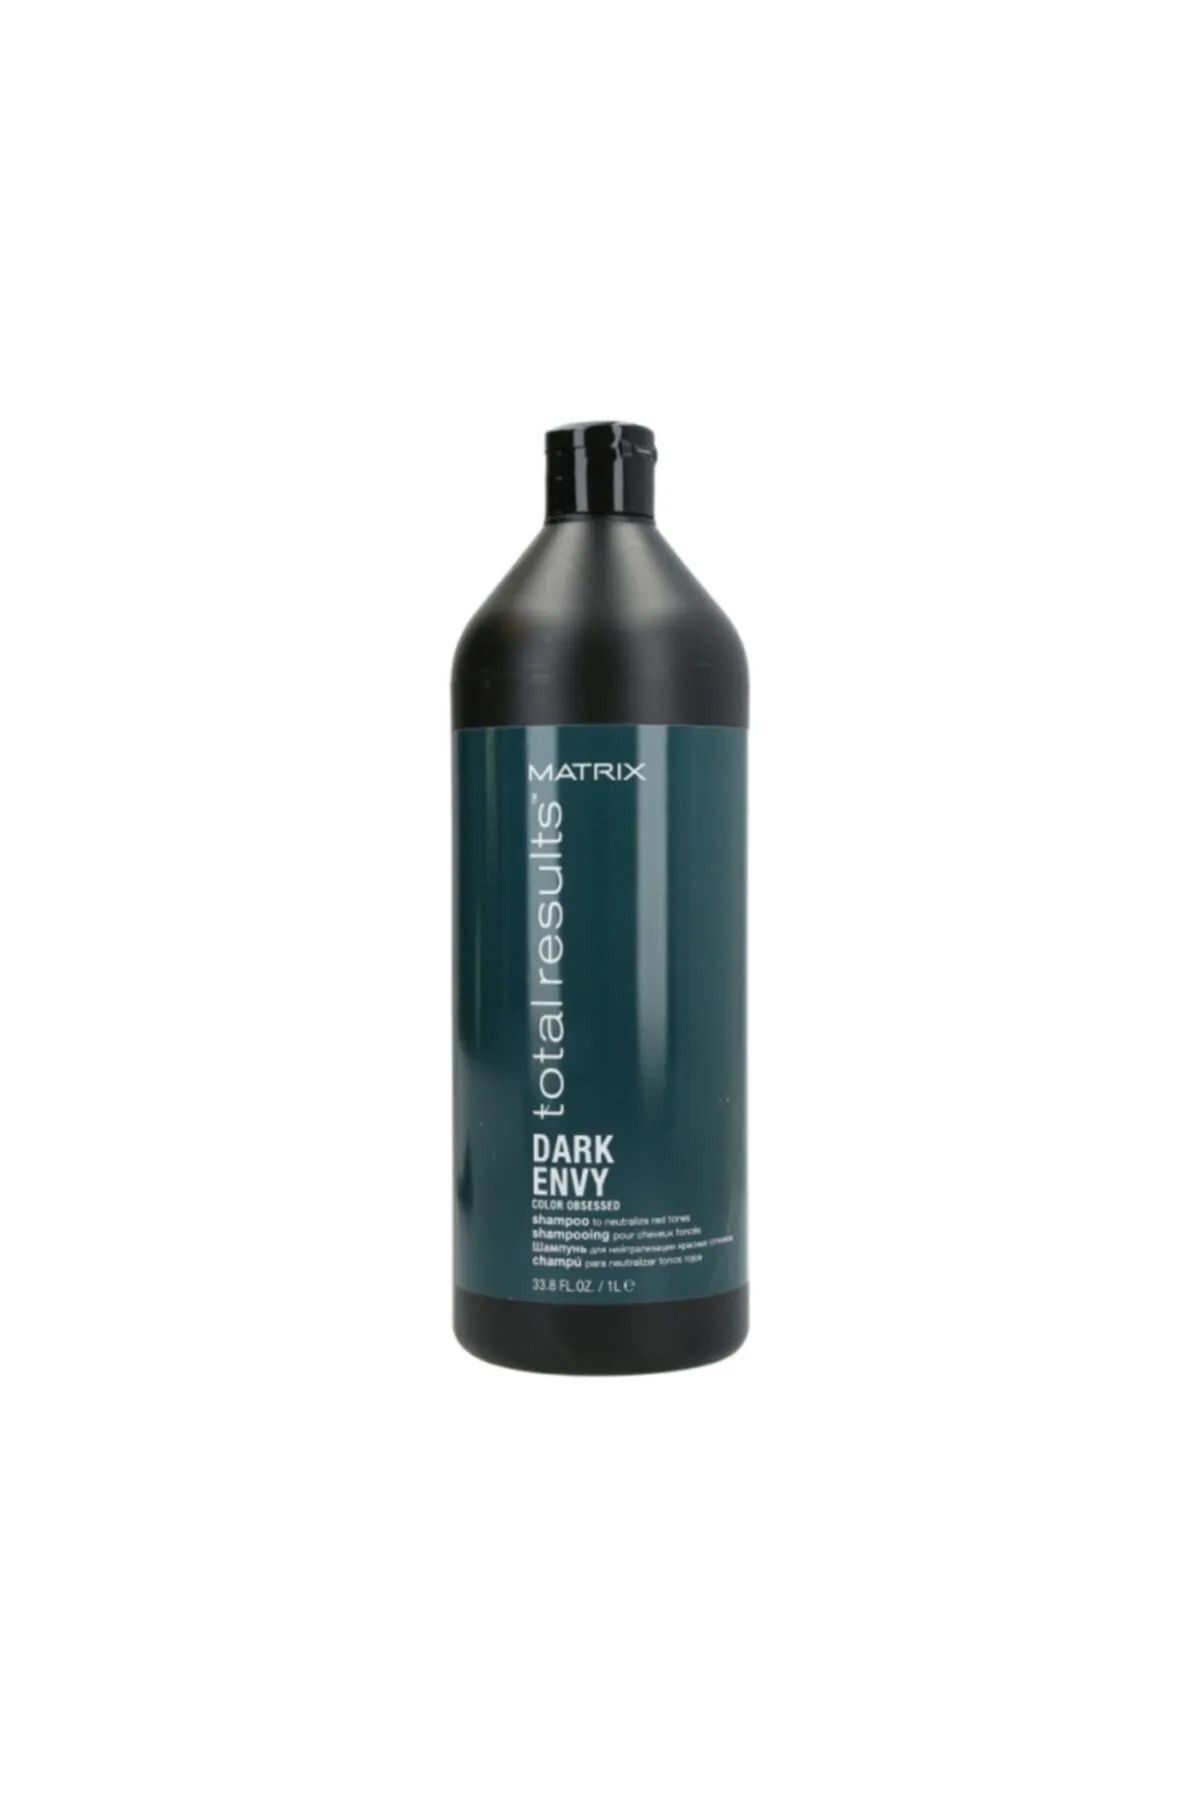 Matrix Total Results Dark Envy Shampoo-Renk Koruyucu Şampuan 1000 ml 33.8 fl oz CYT79746131397413131